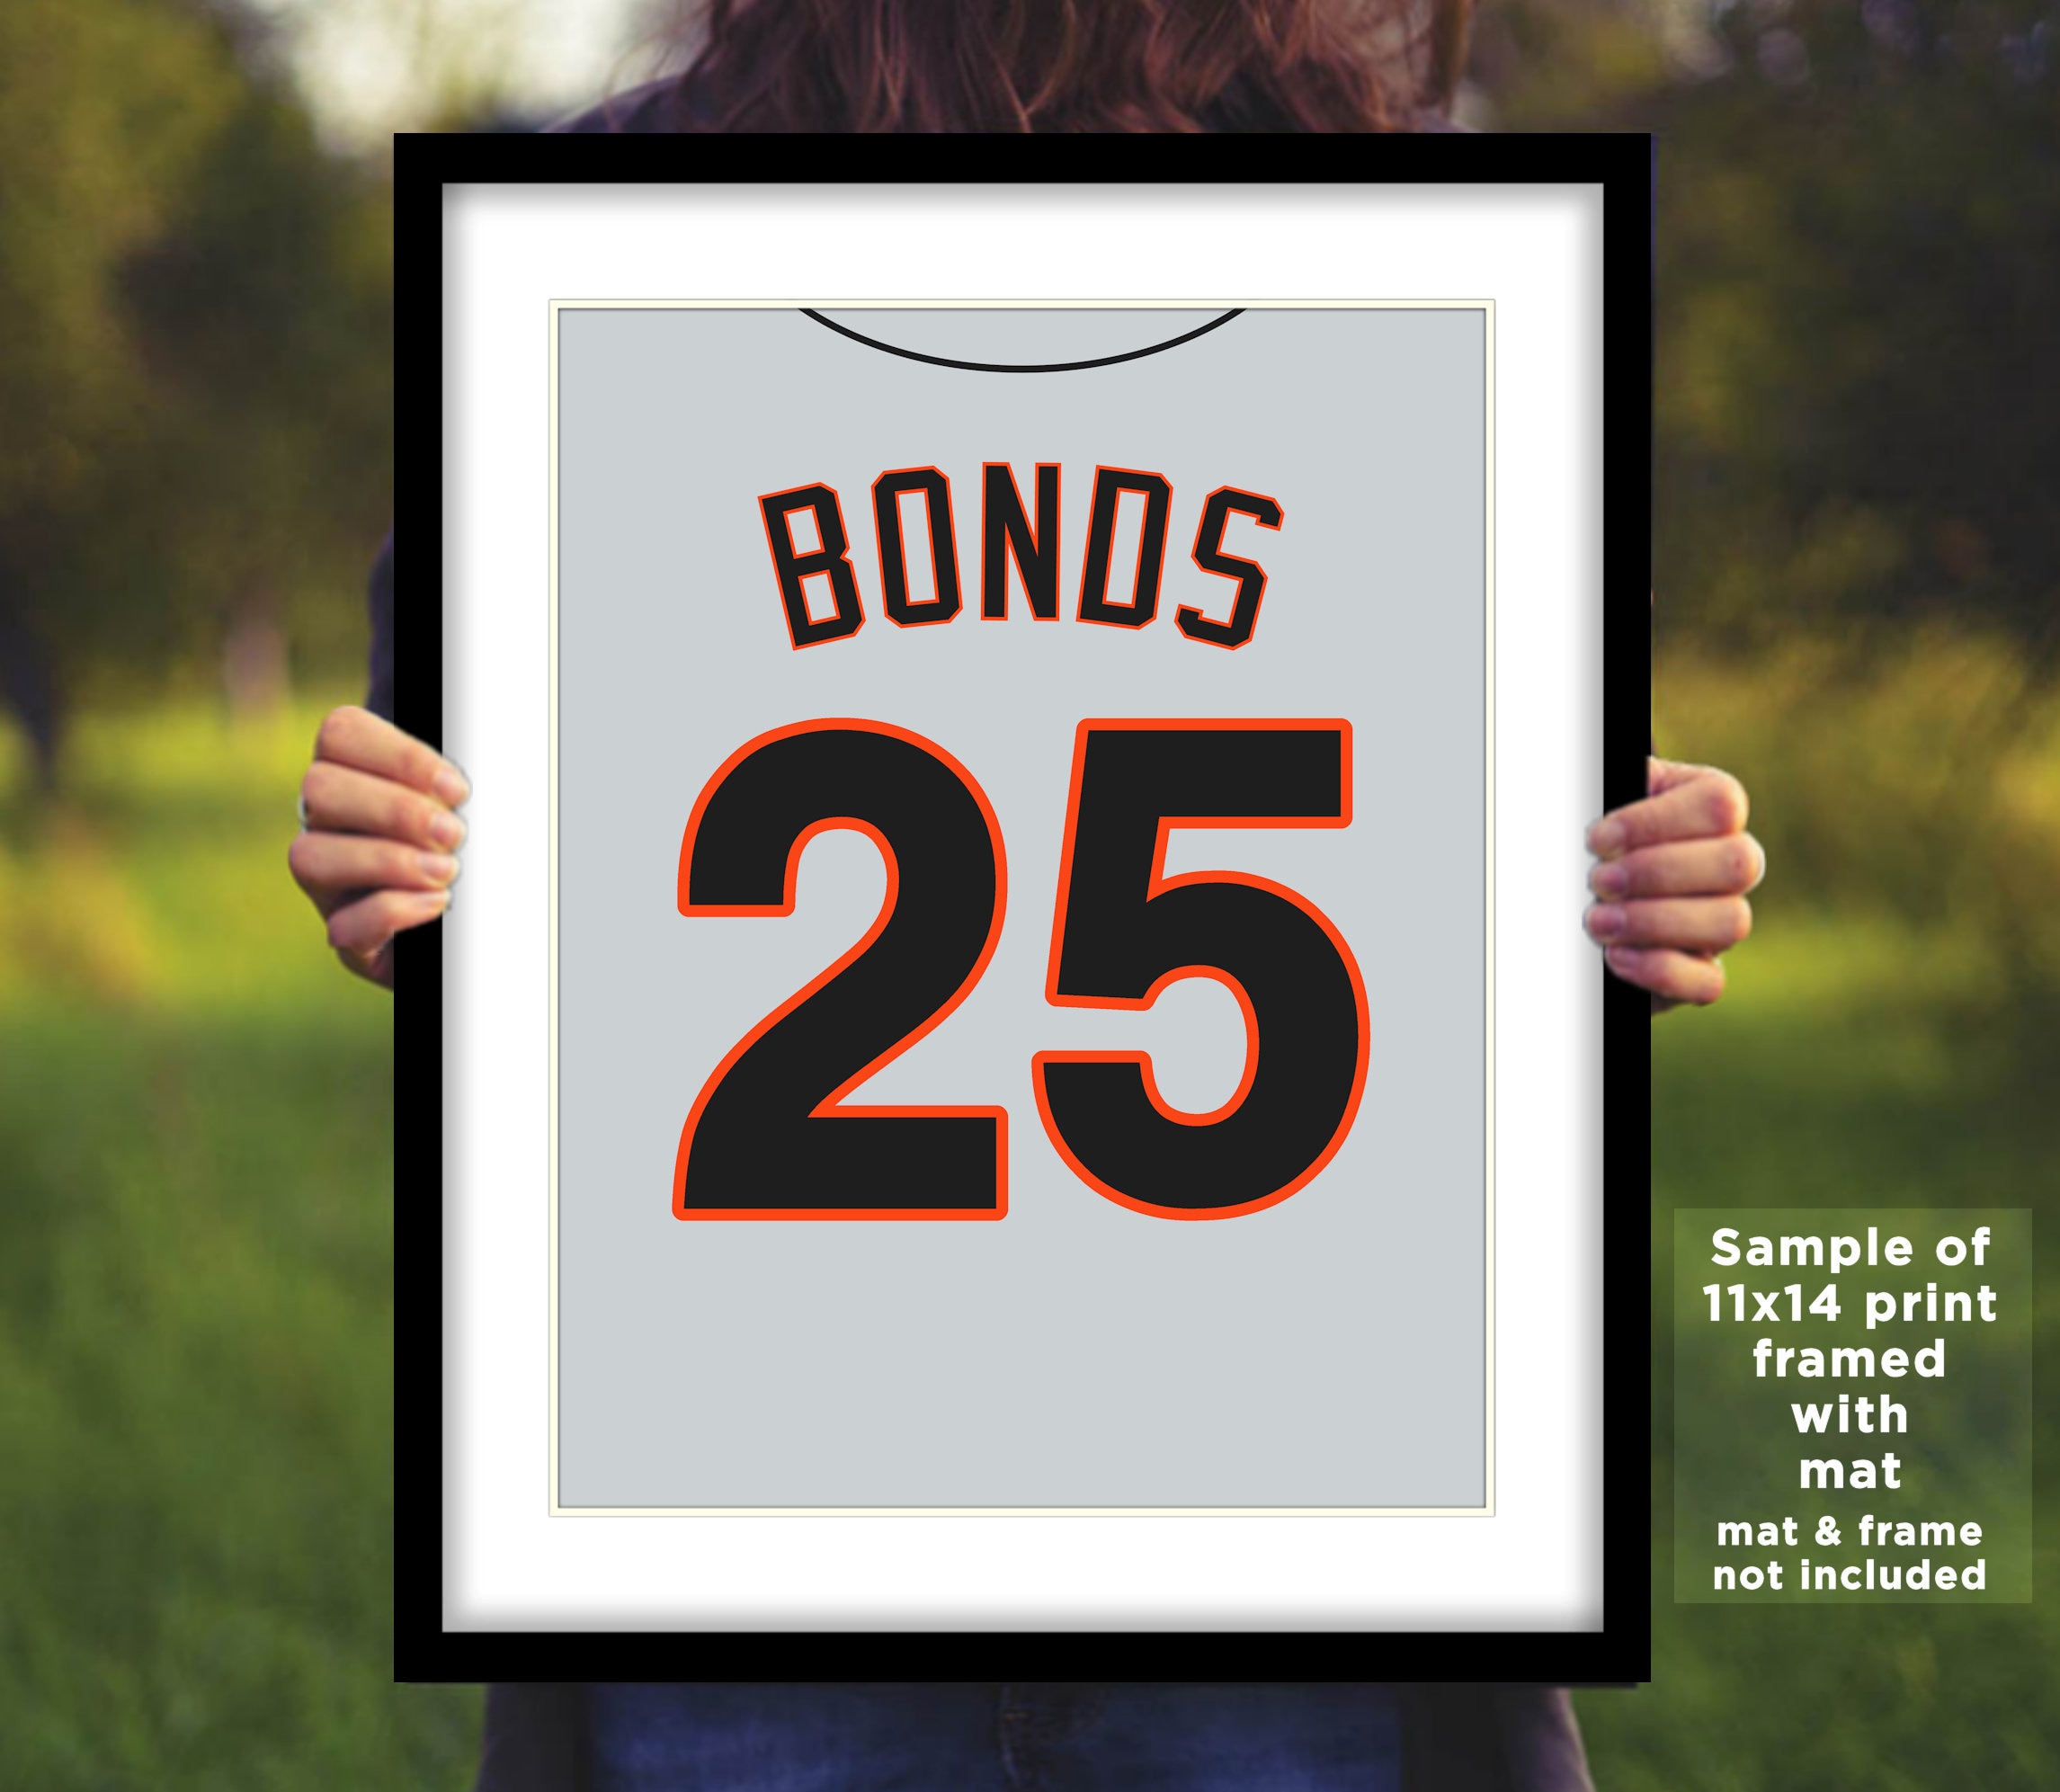 Barry Bonds Giants Custom Framed Jersey Display